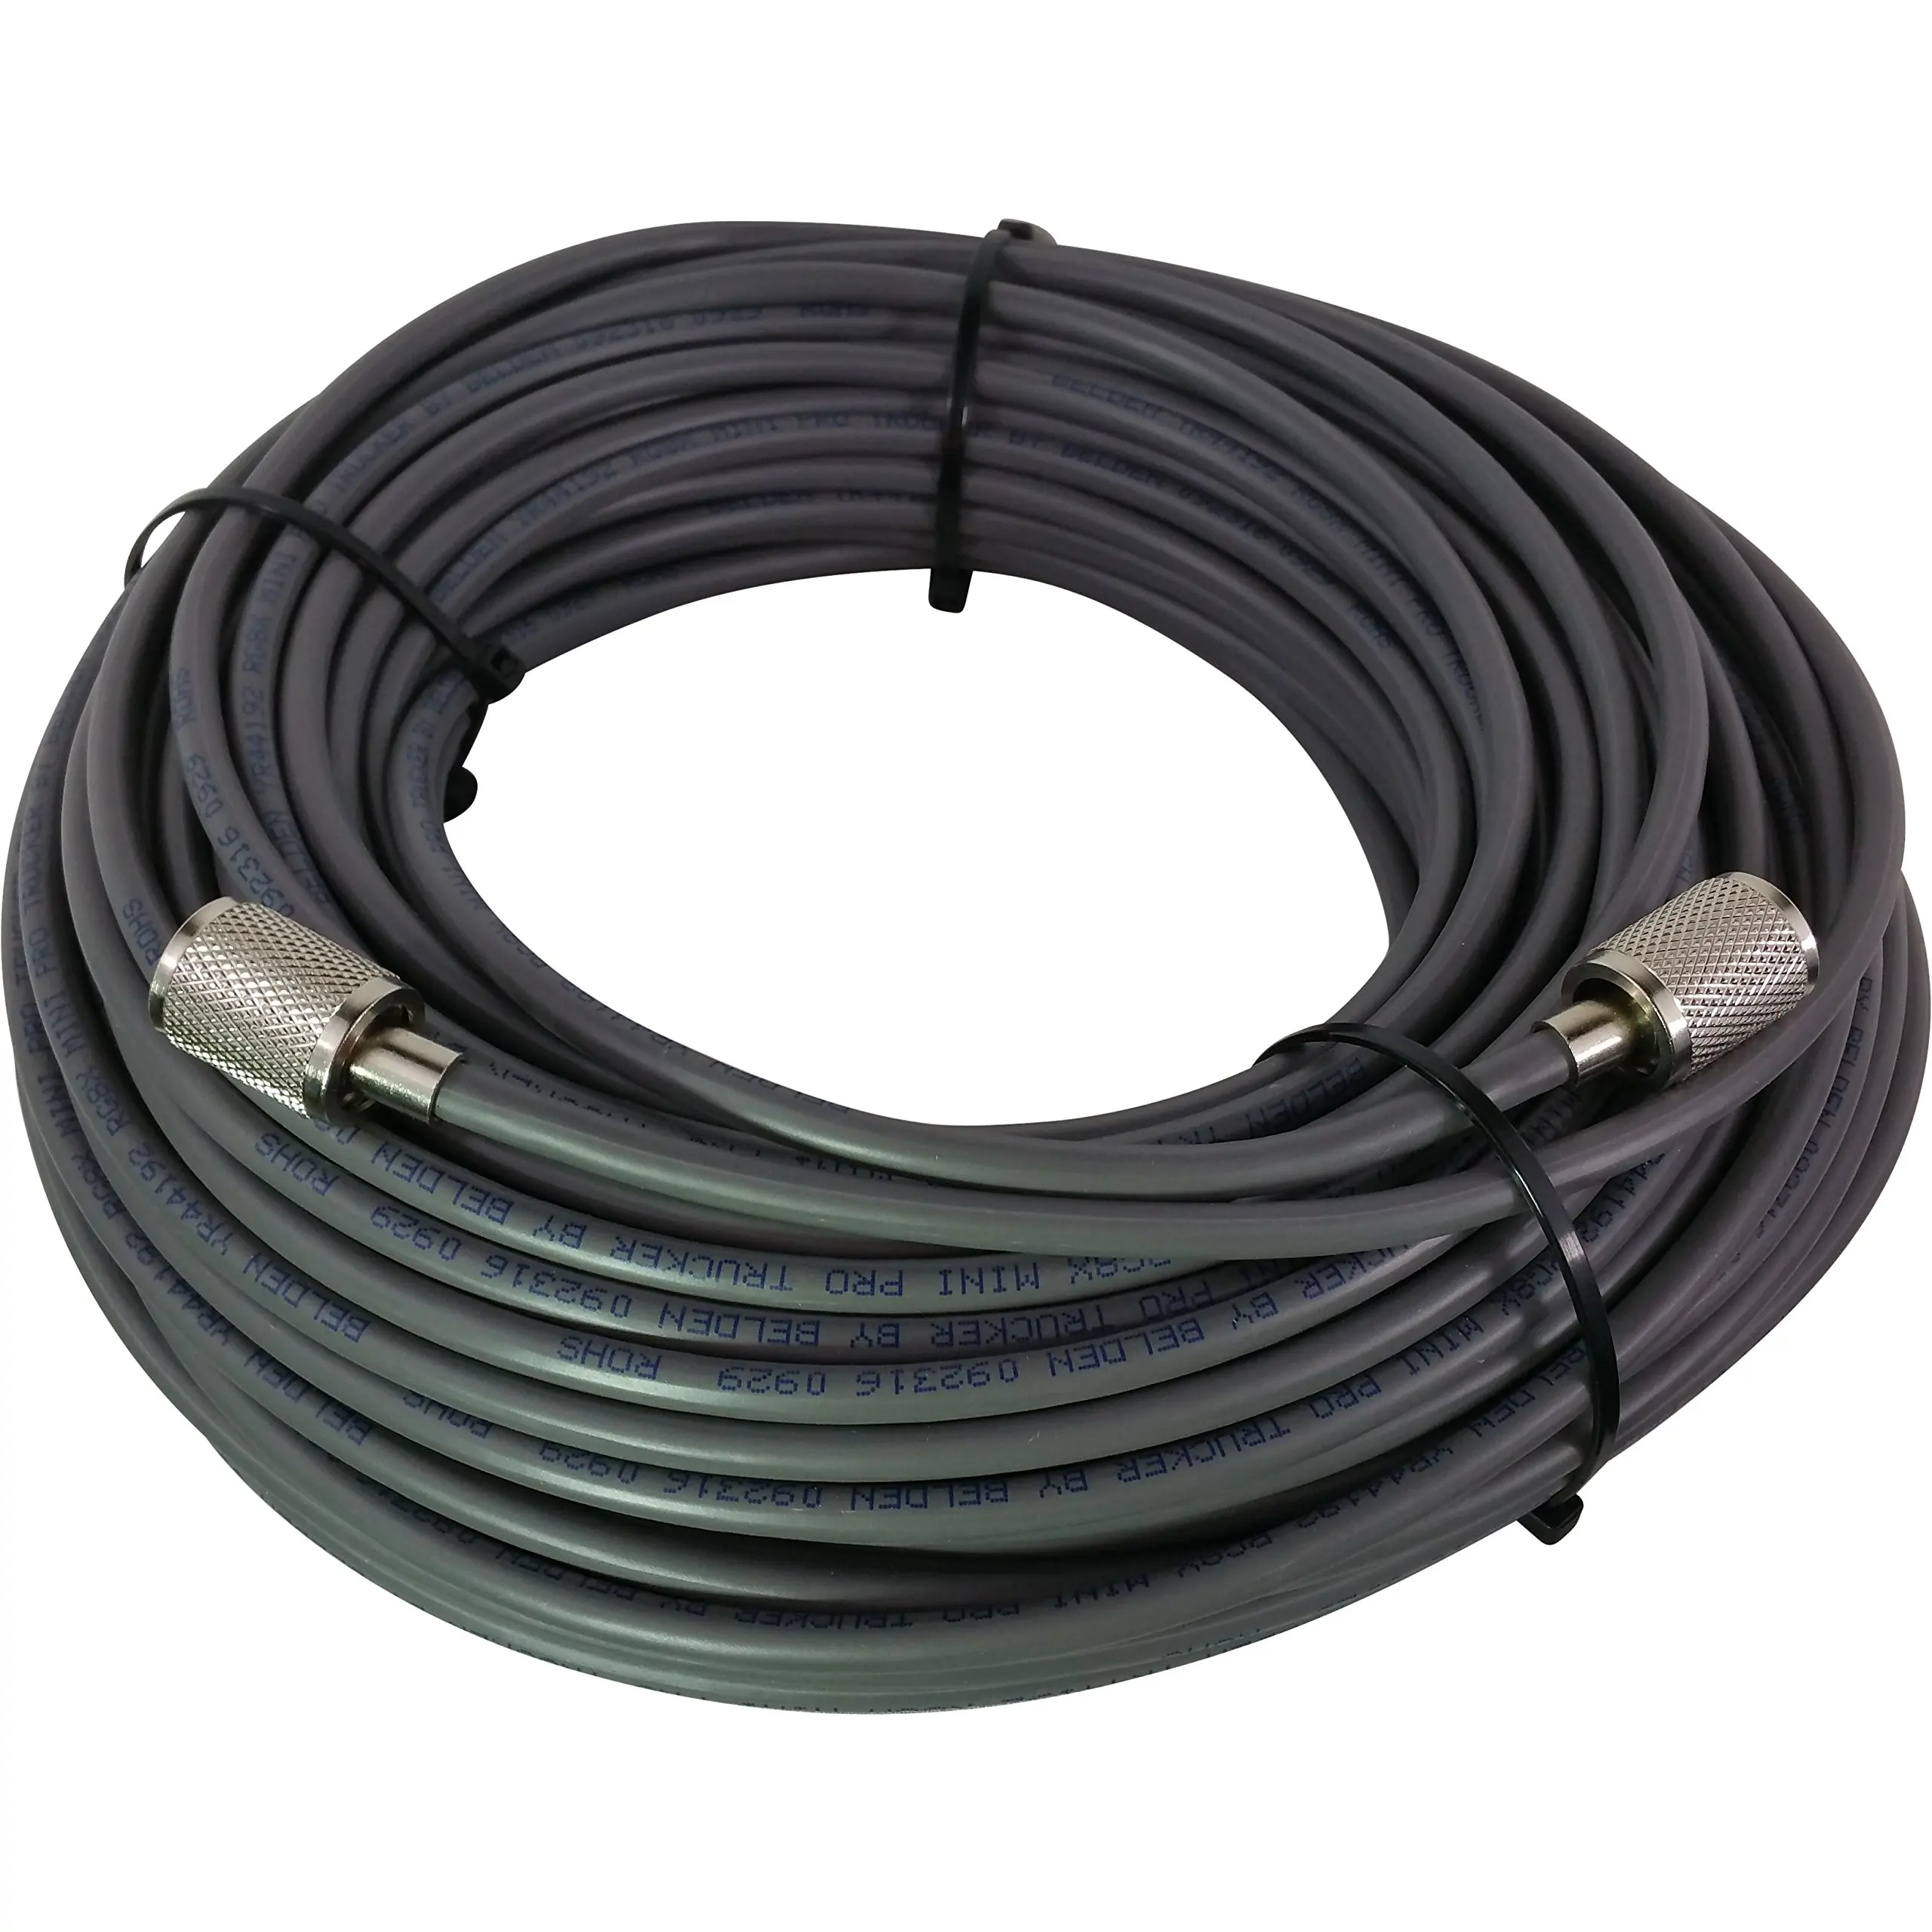 RG 8x кабель. Разъем для кабеля Belden RG-11. RG-8x. Coax Cable. Shielded cable